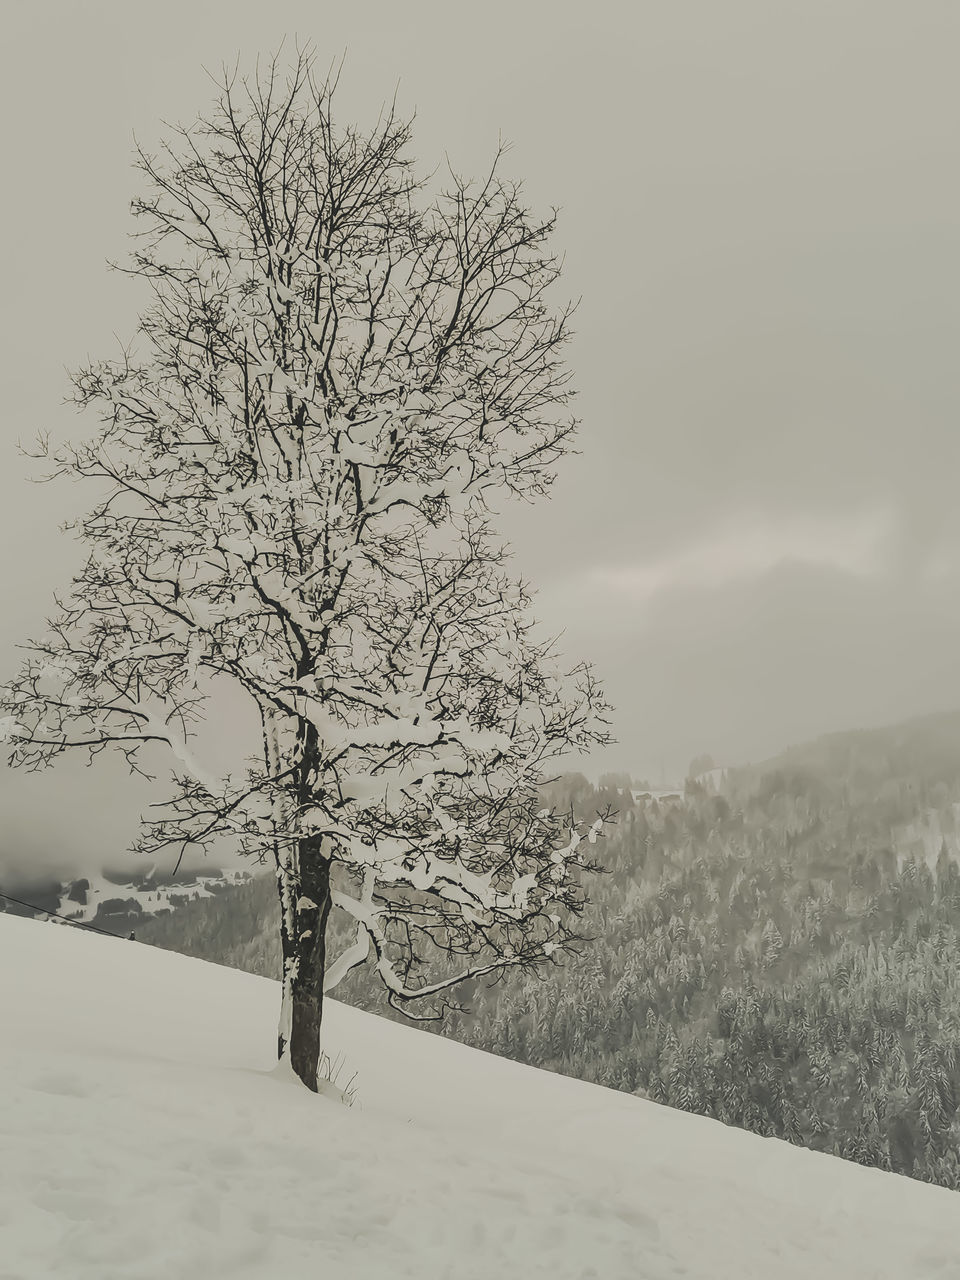 BARE TREE ON SNOWY FIELD AGAINST SKY